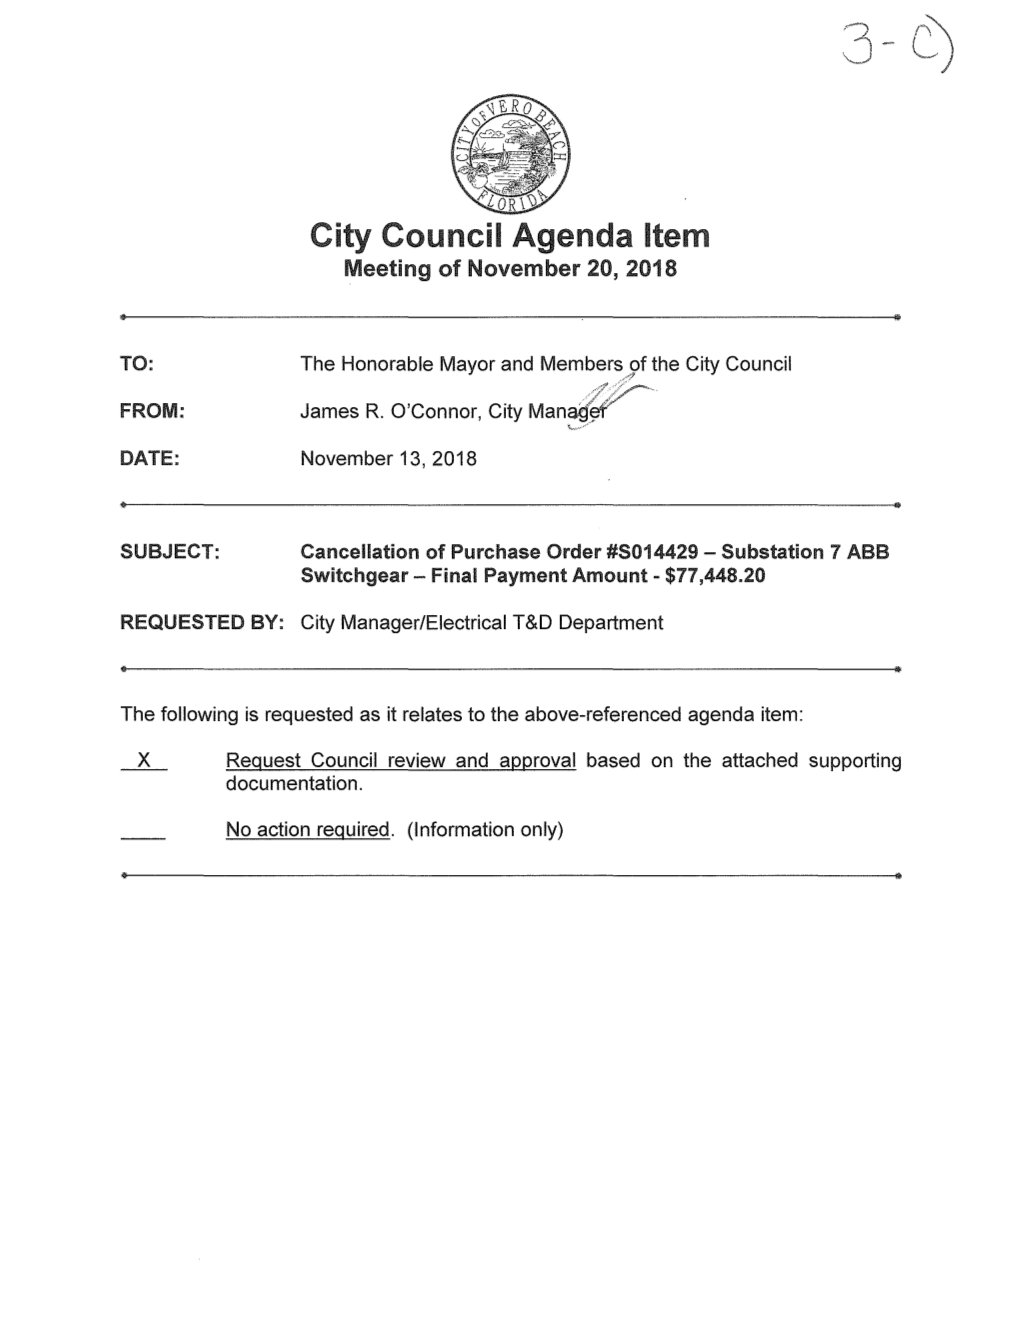 City Council Agenda Item Meeting of November 20, 2018